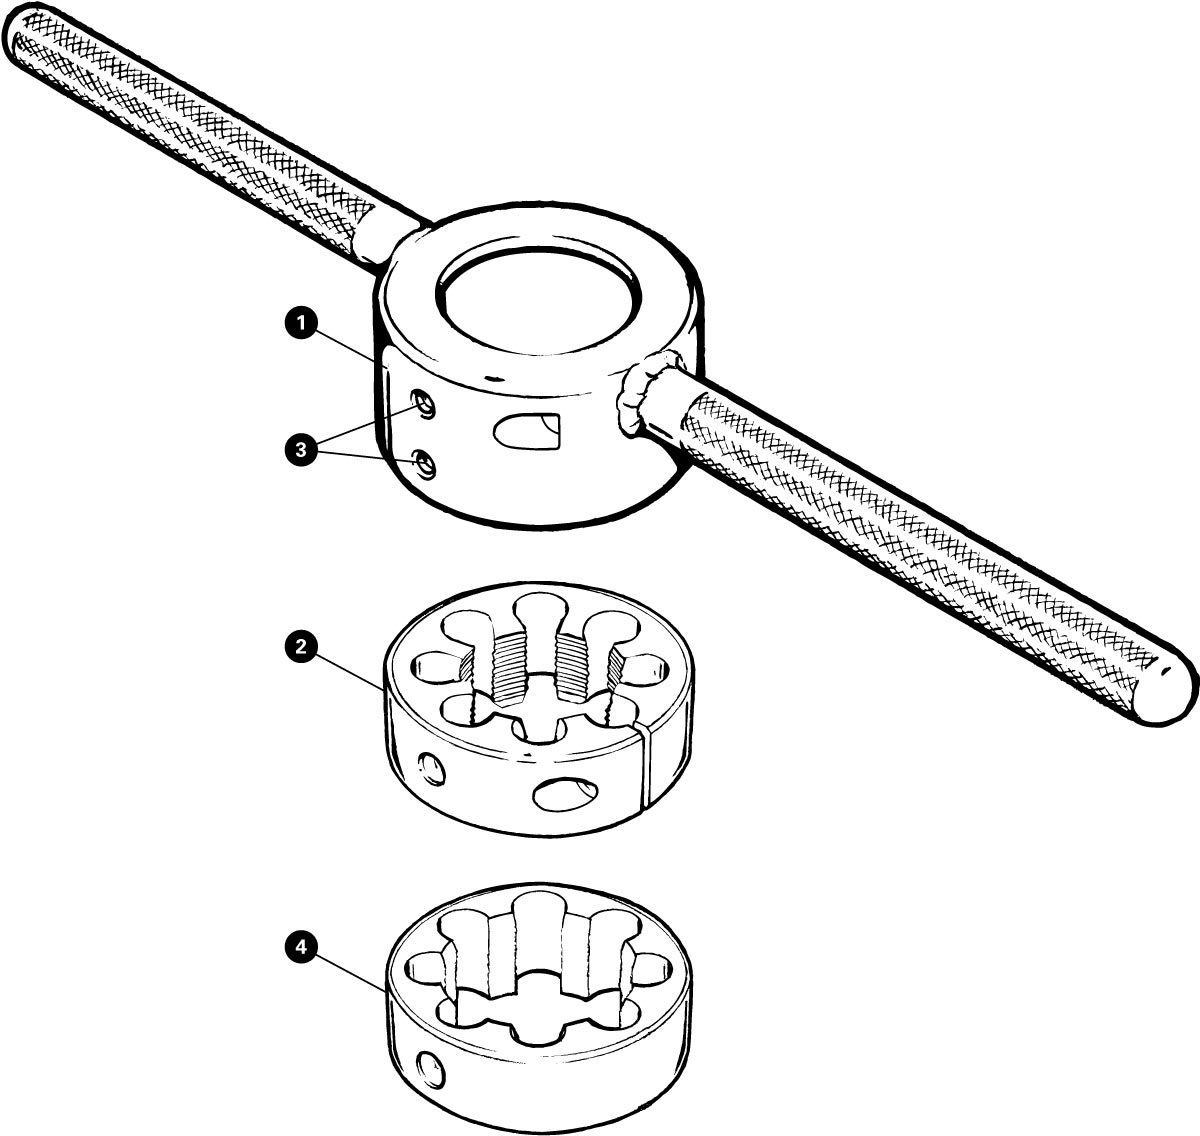 Parts diagram for FTS-1 Fork Threading Set, click to enlarge